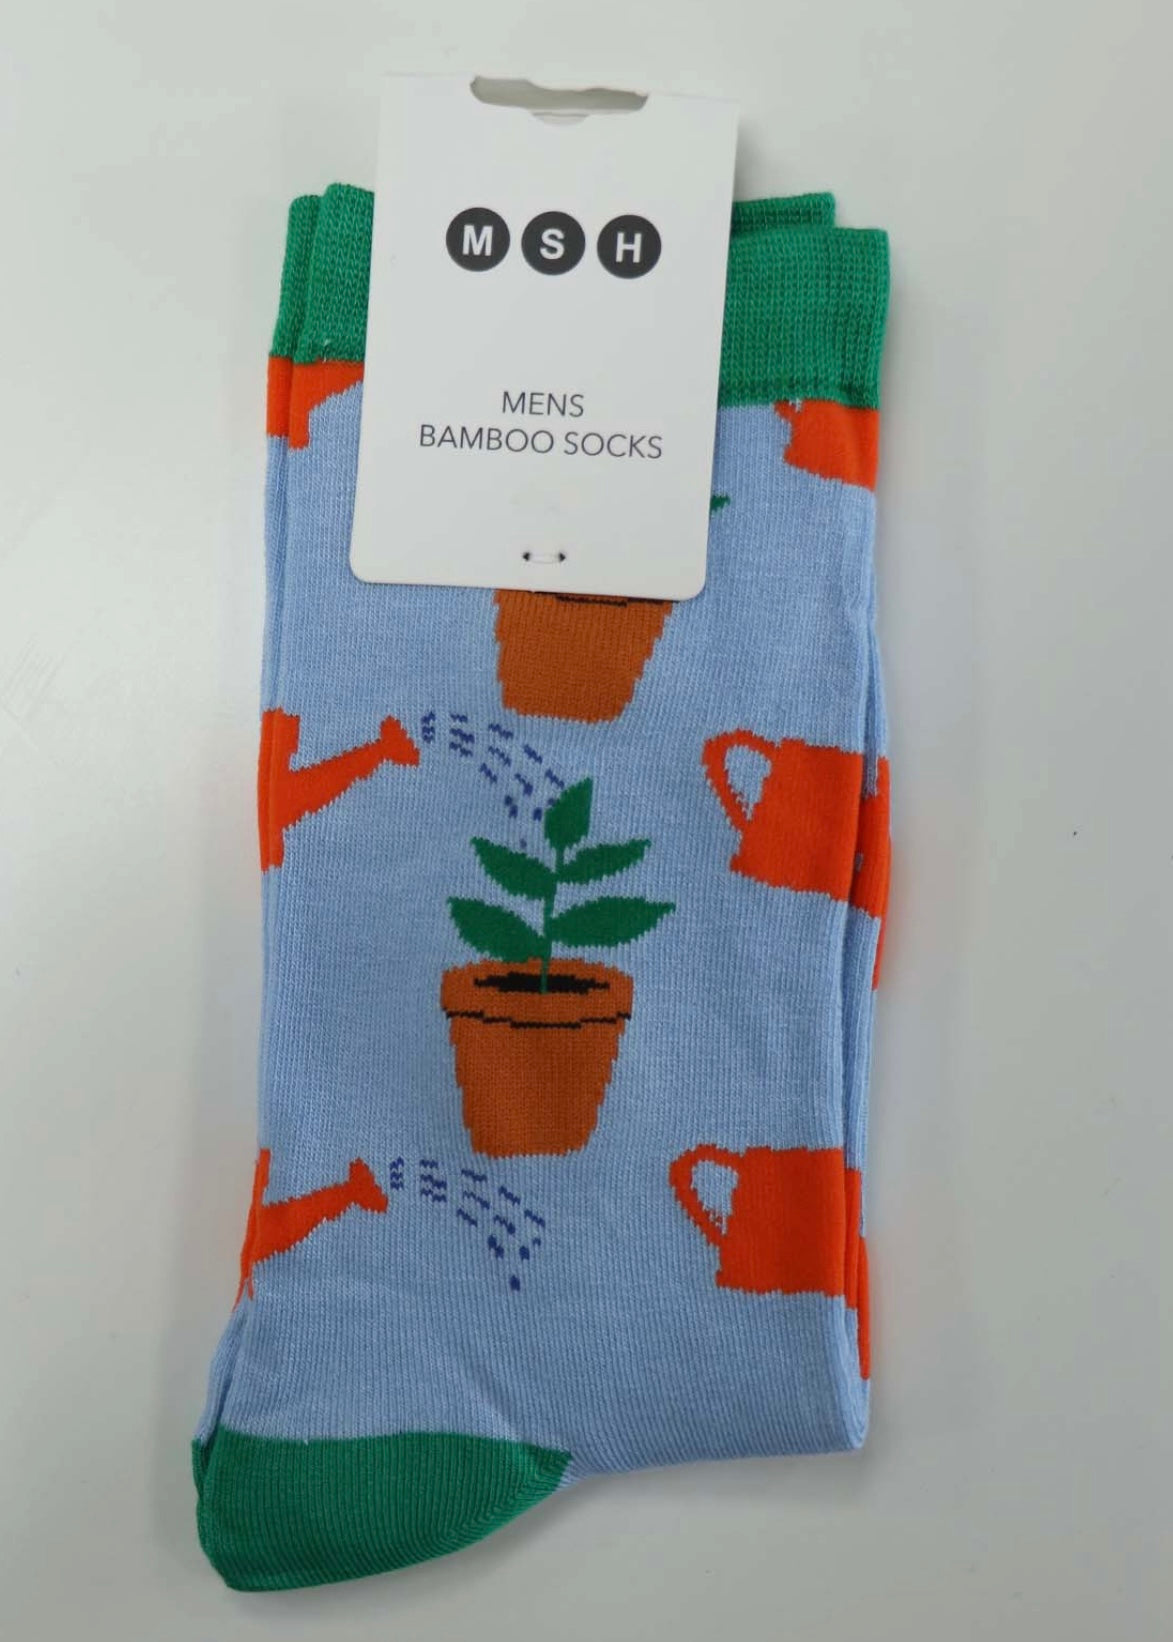 *MSH - Men's Bamboo Socks / Plant Pots